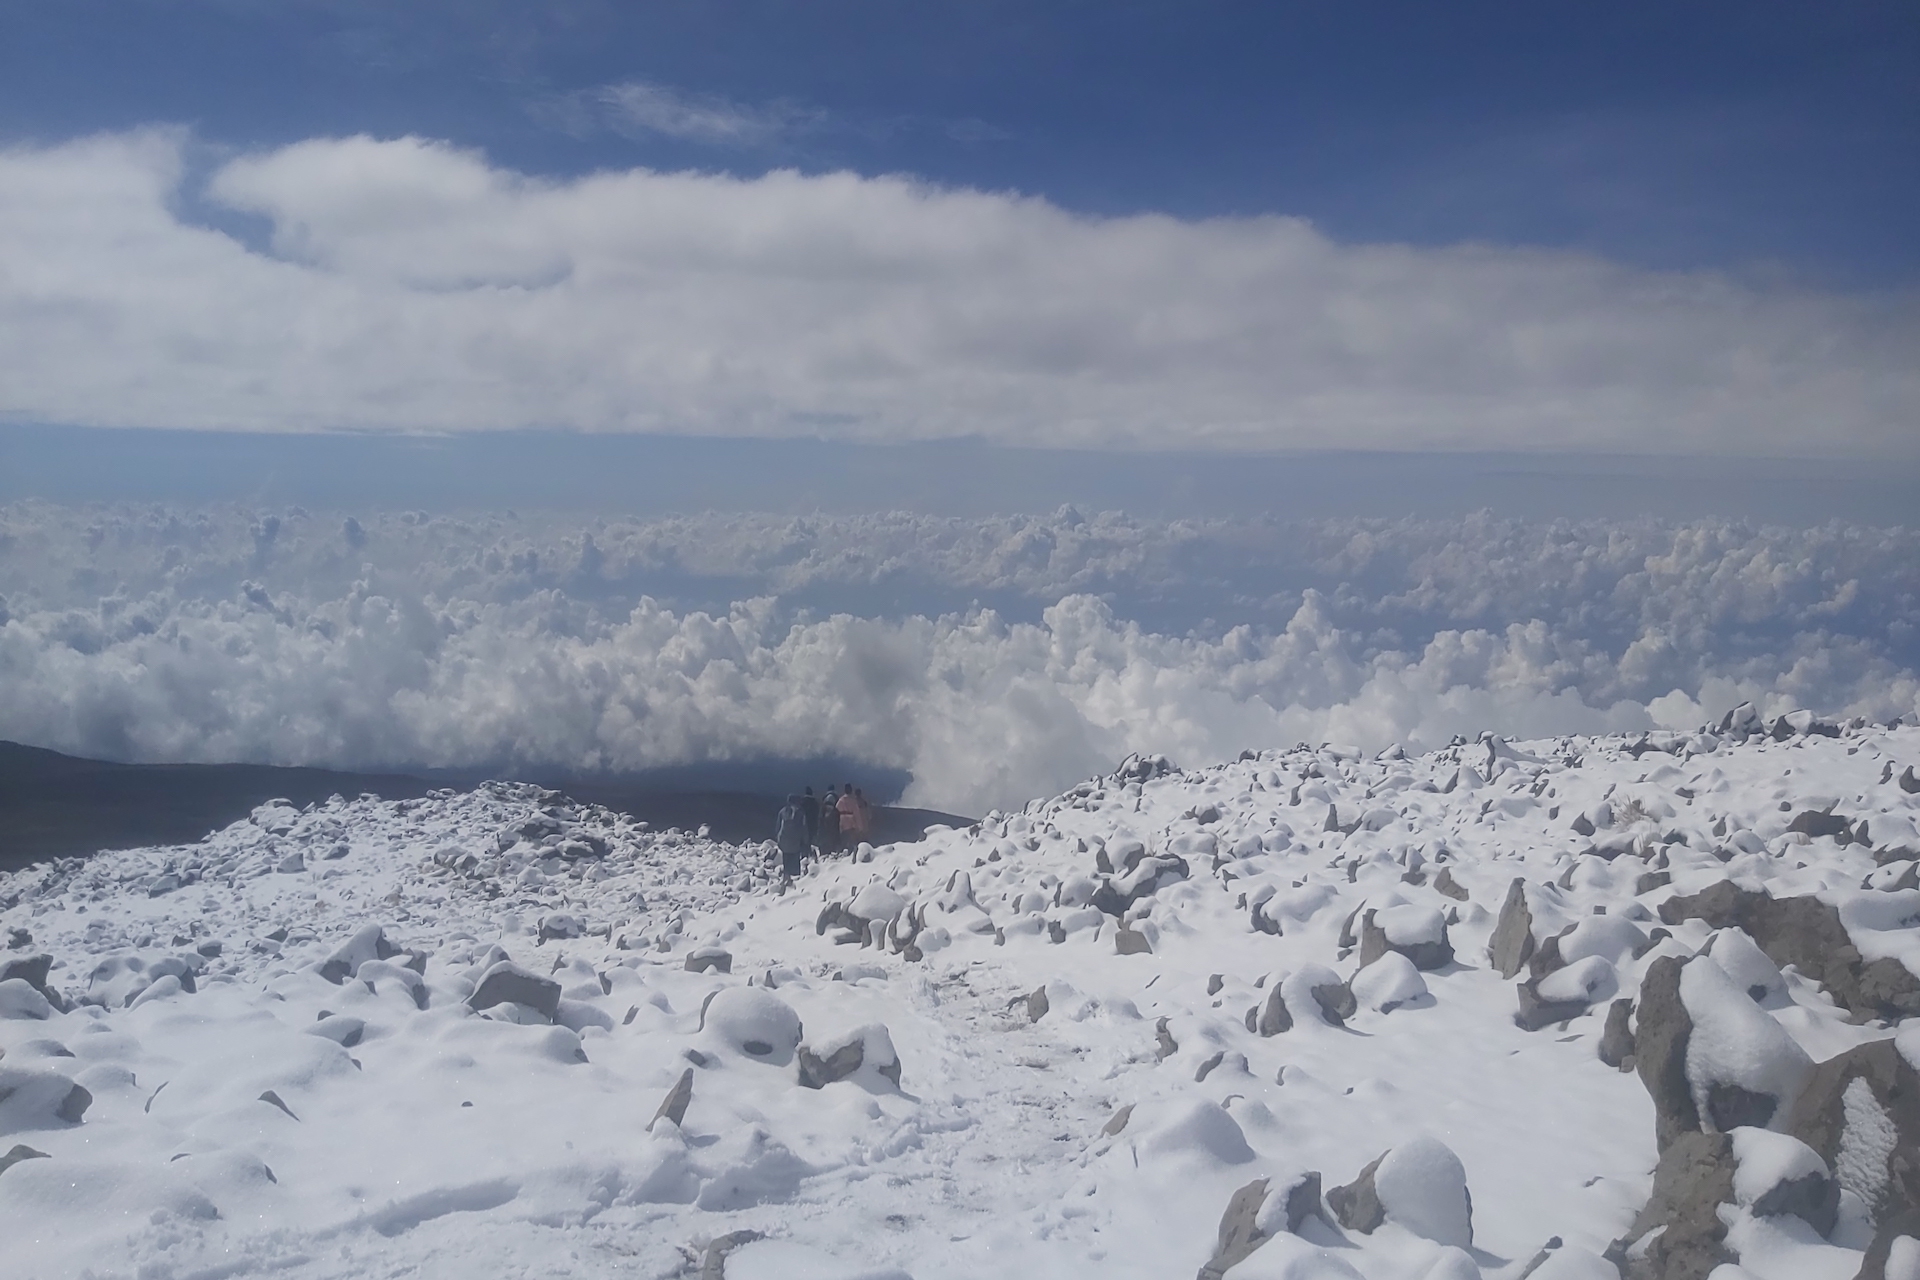 Above Mount Kilimanjaro on bike with AWAT